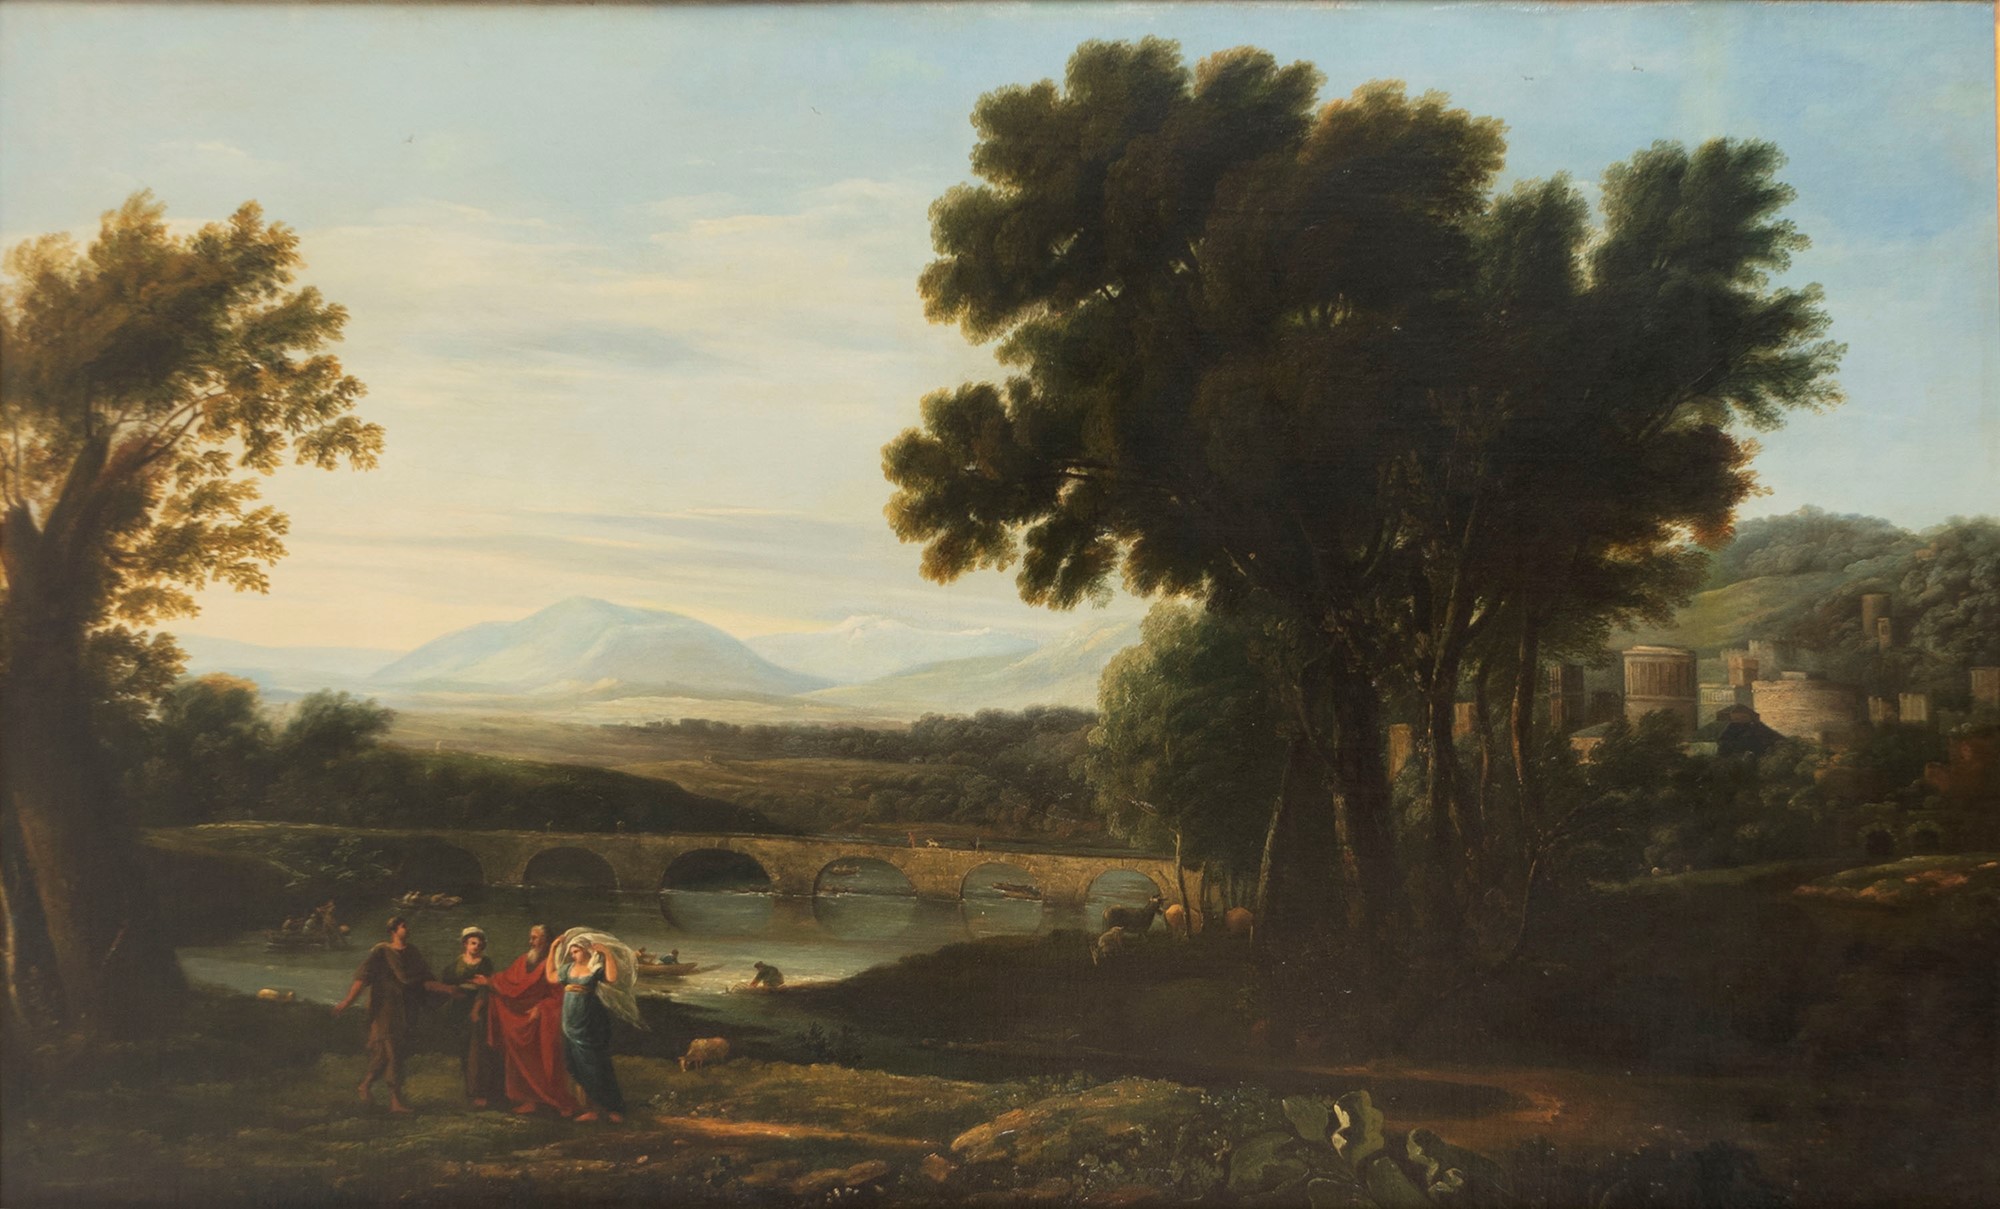 Flemish painter active in Rome, last quarter of the seventeenth century - beginning of the eighteent